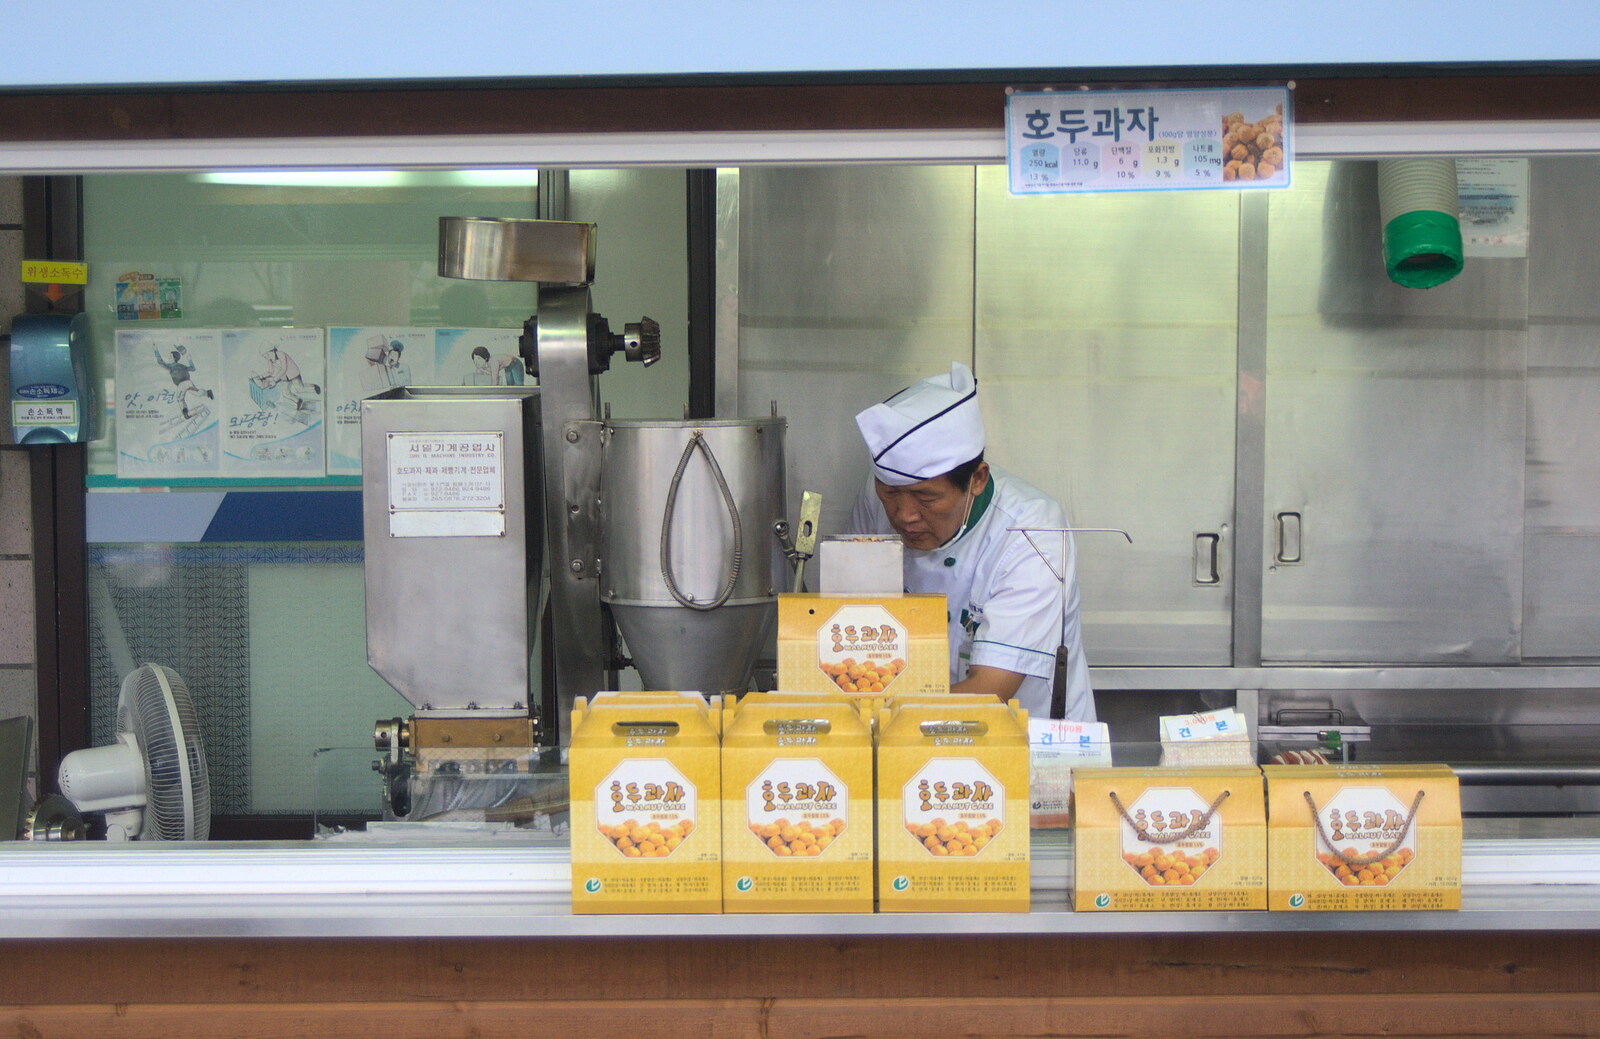 The snack shack from Working at Samsung, and Geumosan Mountain, Gumi, Gyeongsangbuk-do, Korea - 24th June 2012